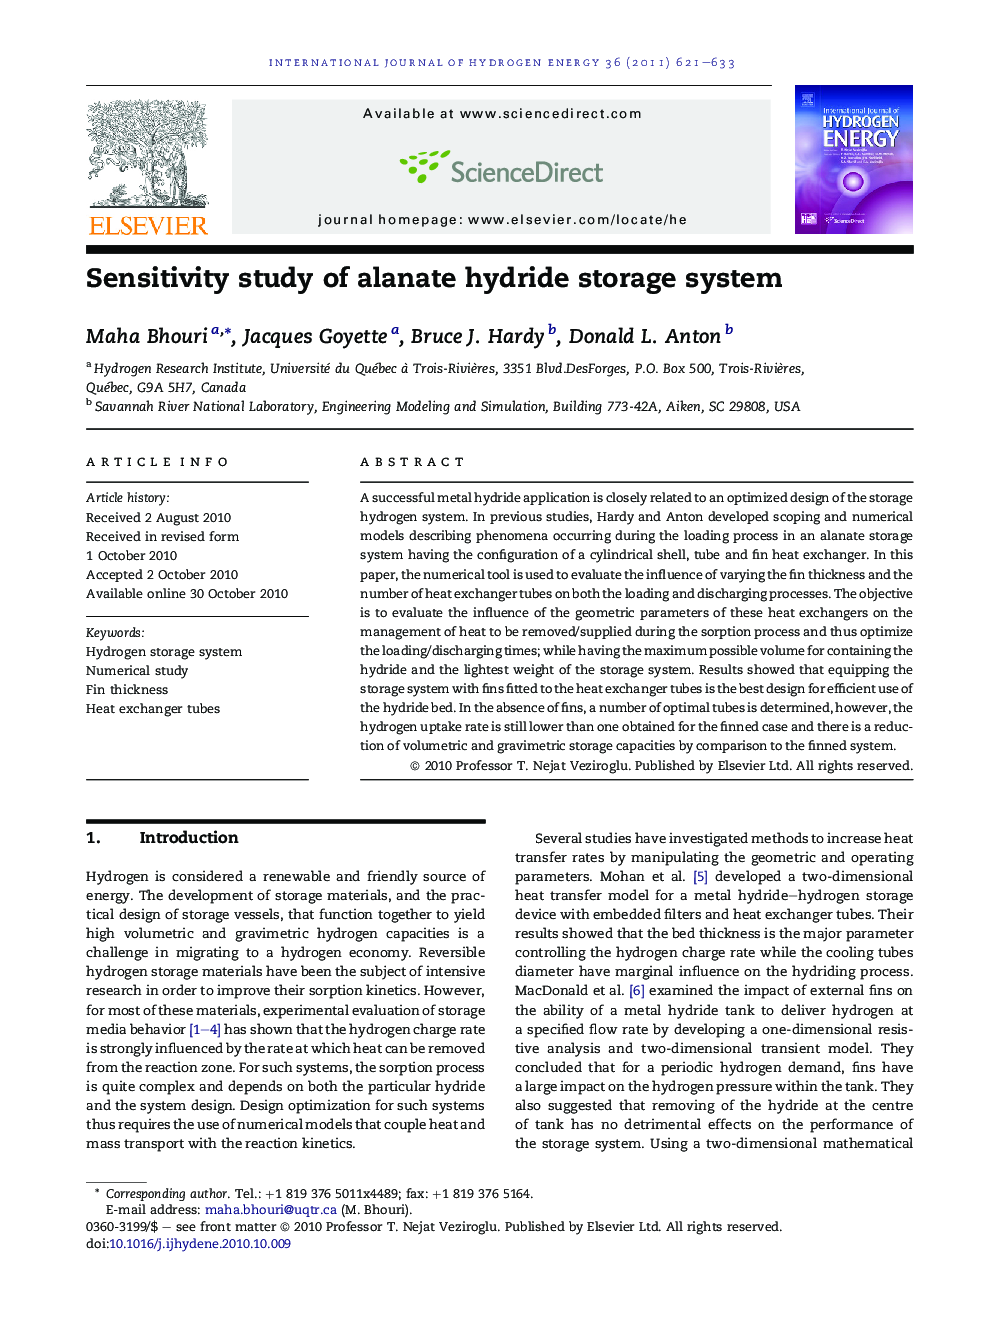 Sensitivity study of alanate hydride storage system